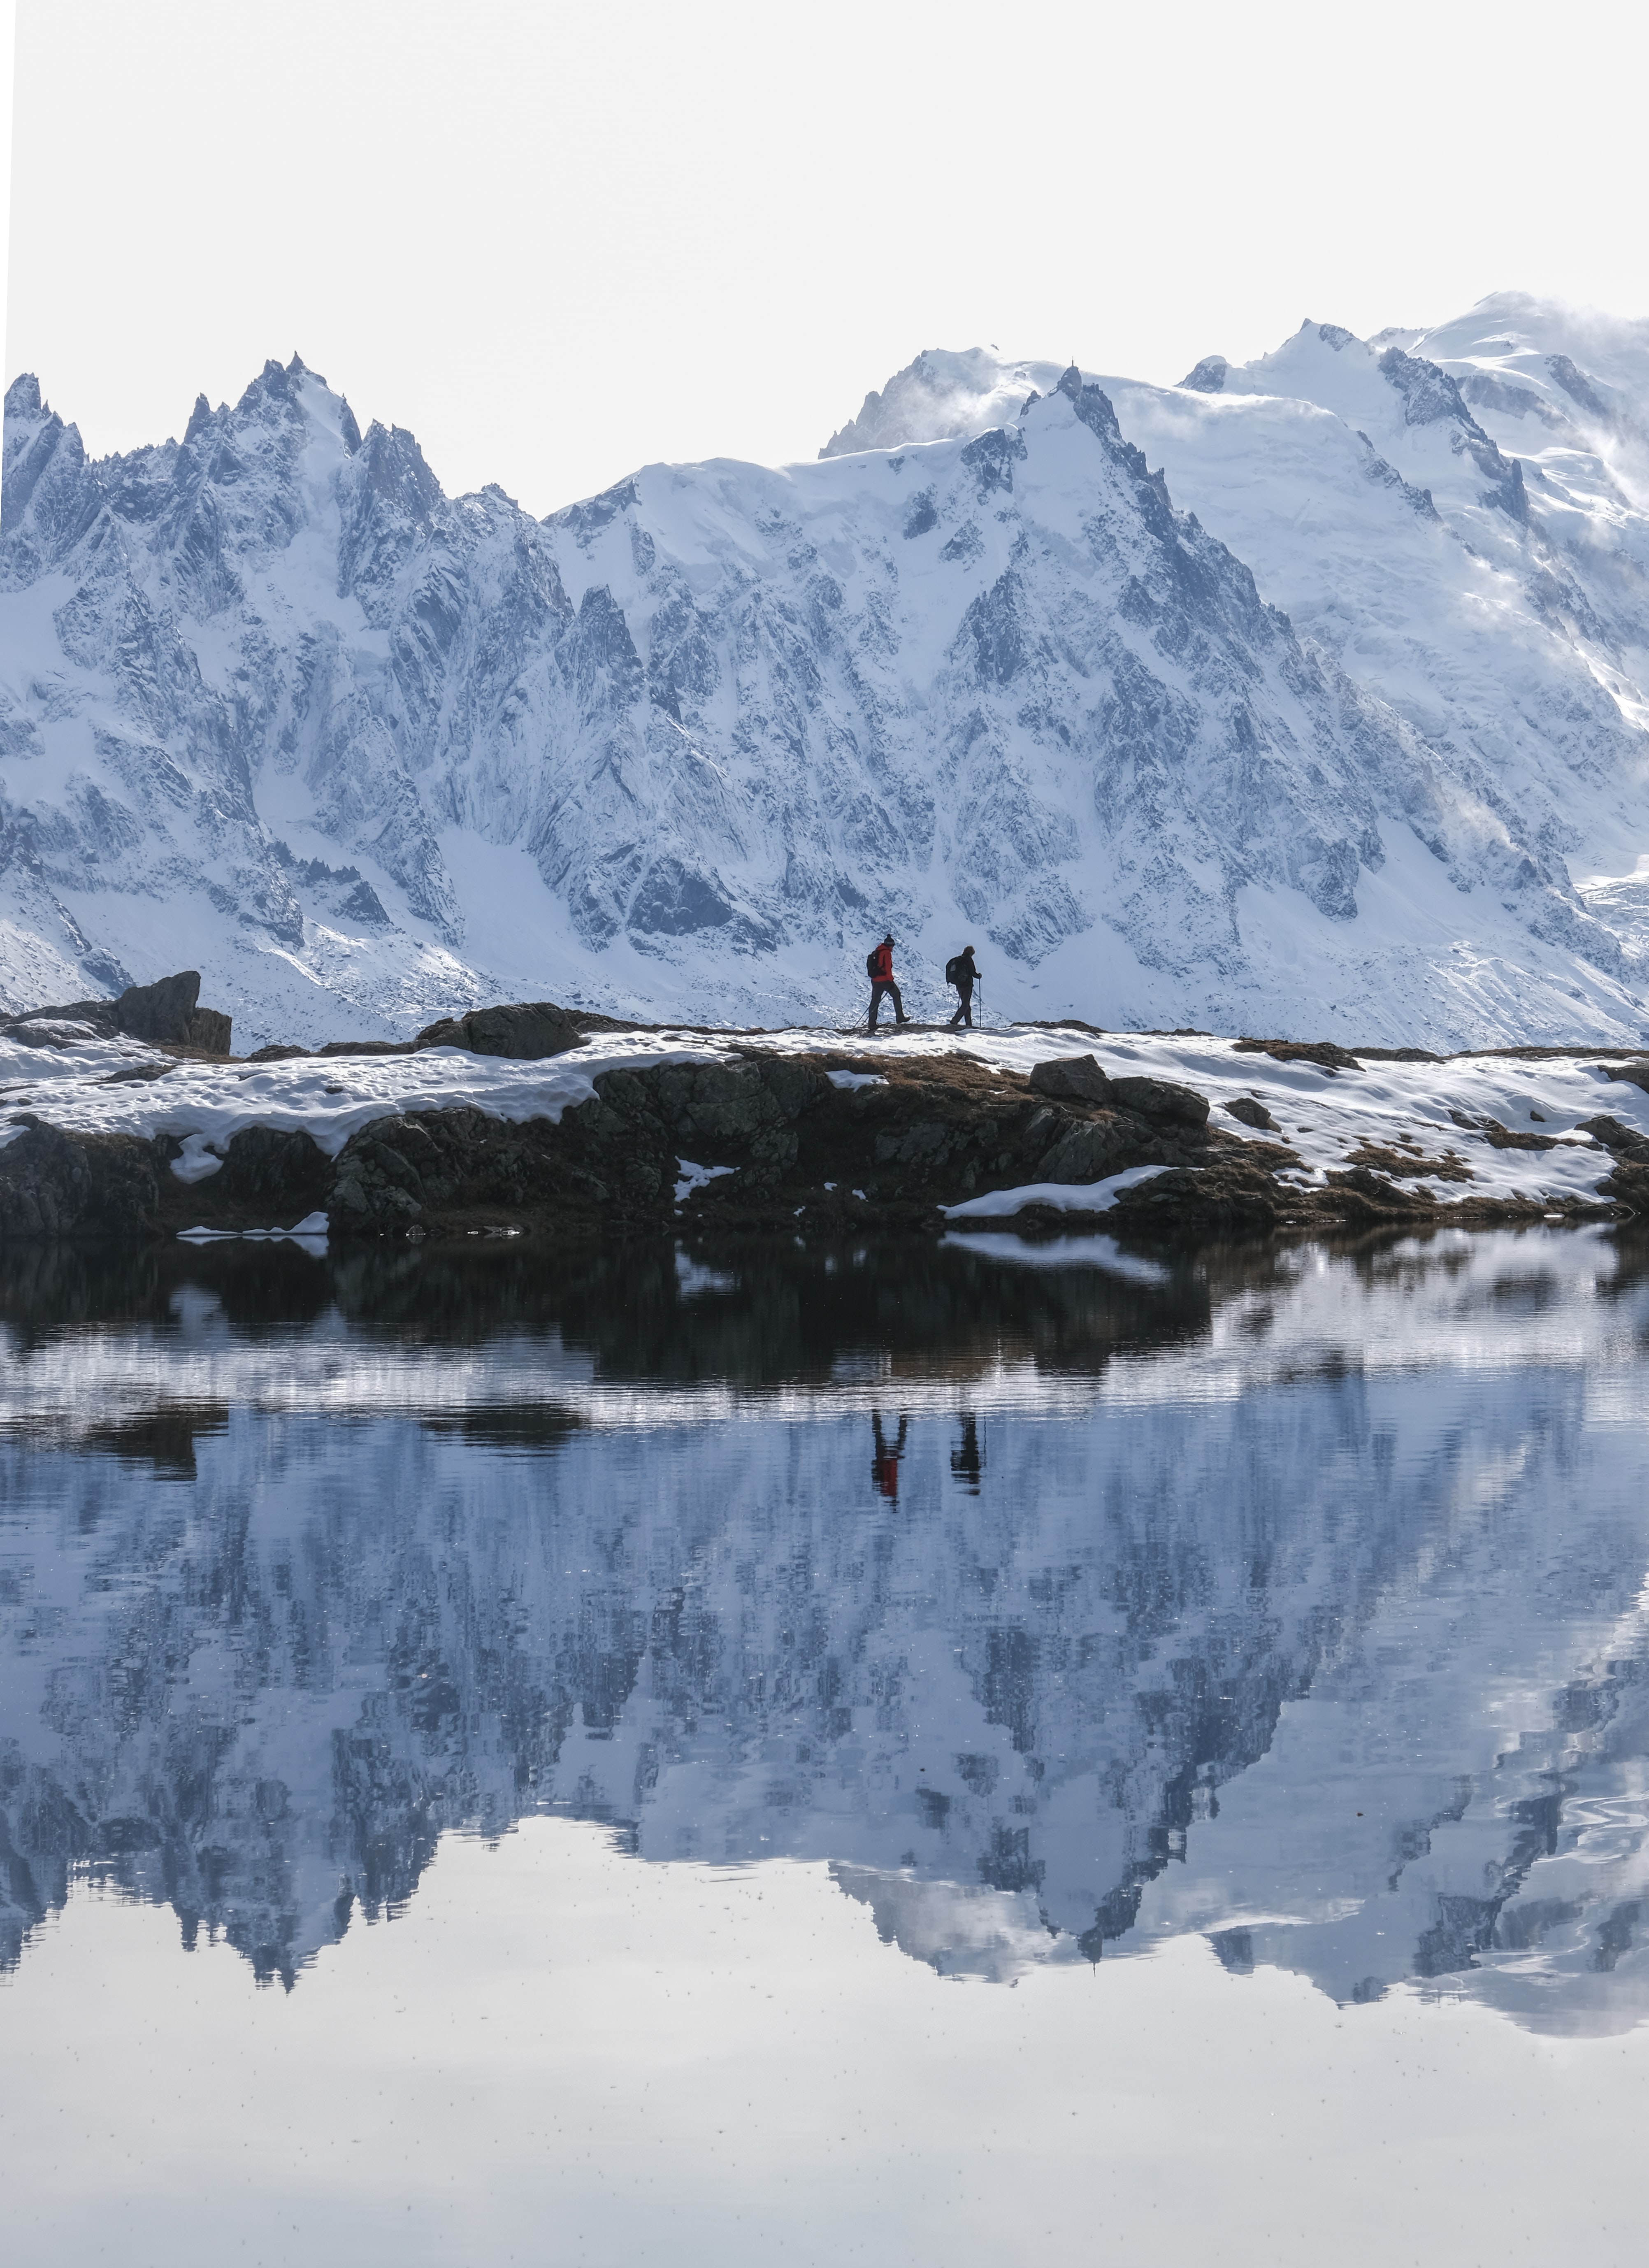 android journey, people, nature, snow, mountain, lake, miscellanea, miscellaneous